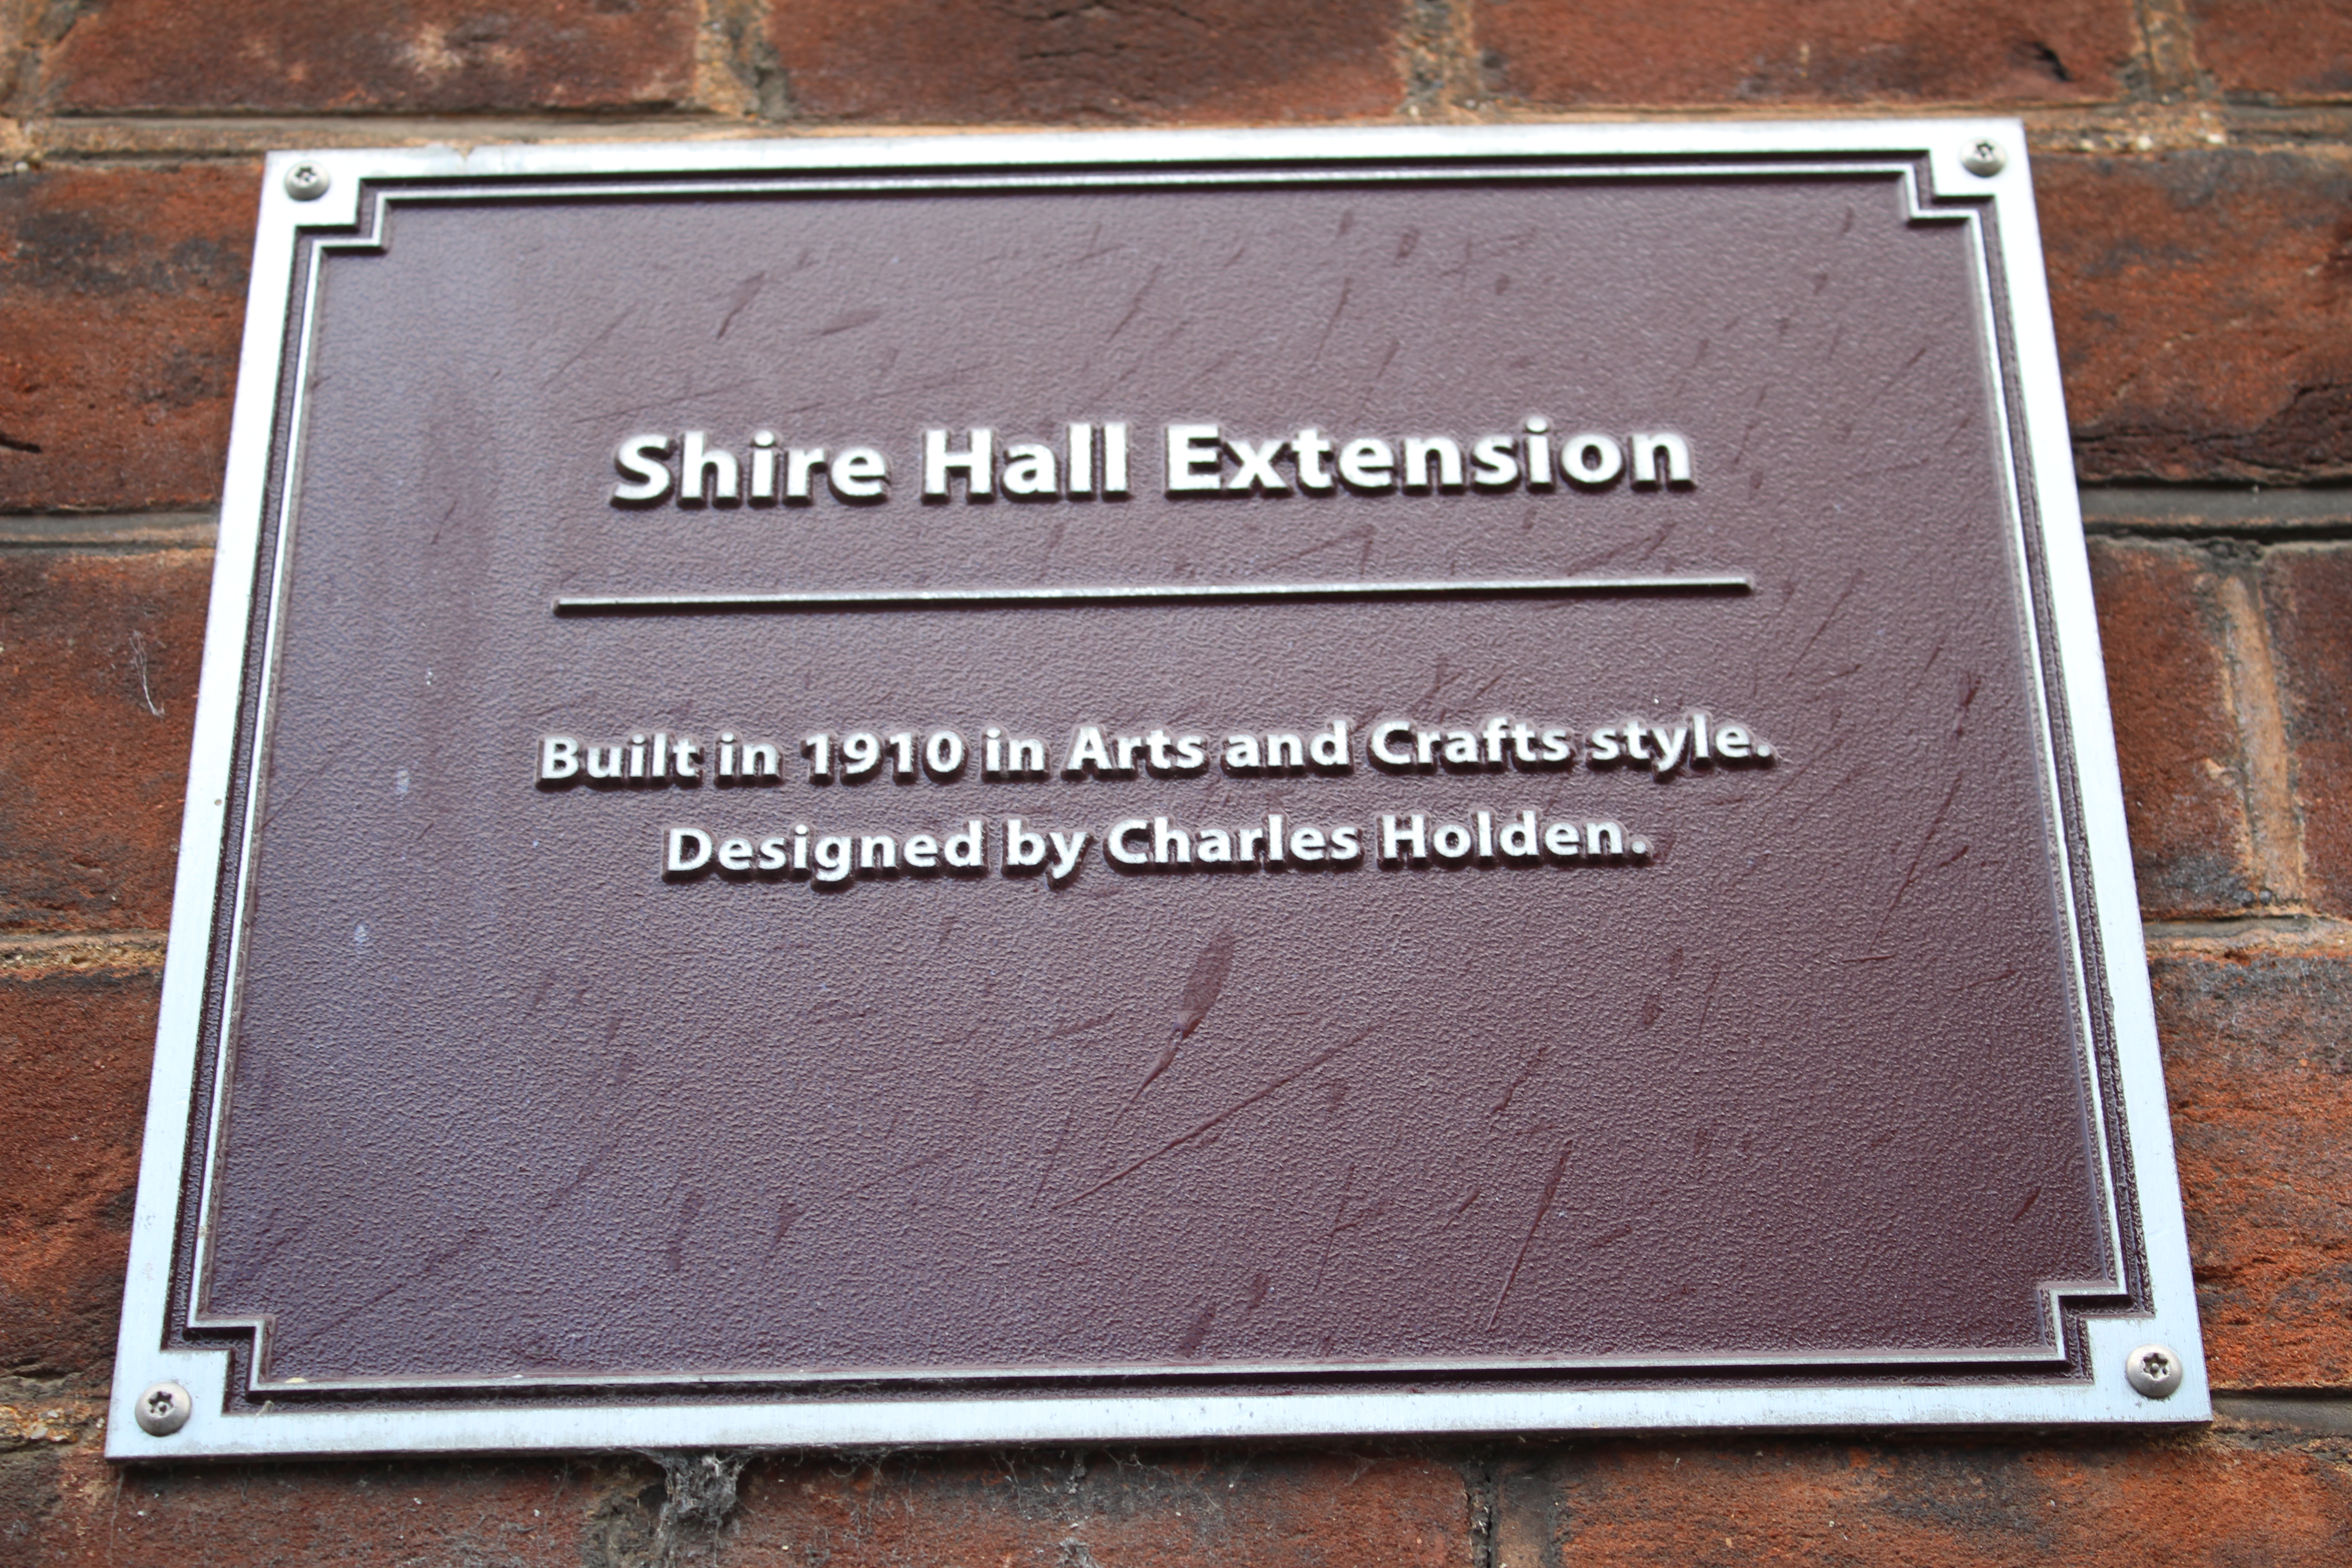 Shire Hall Extension commemorative plaque